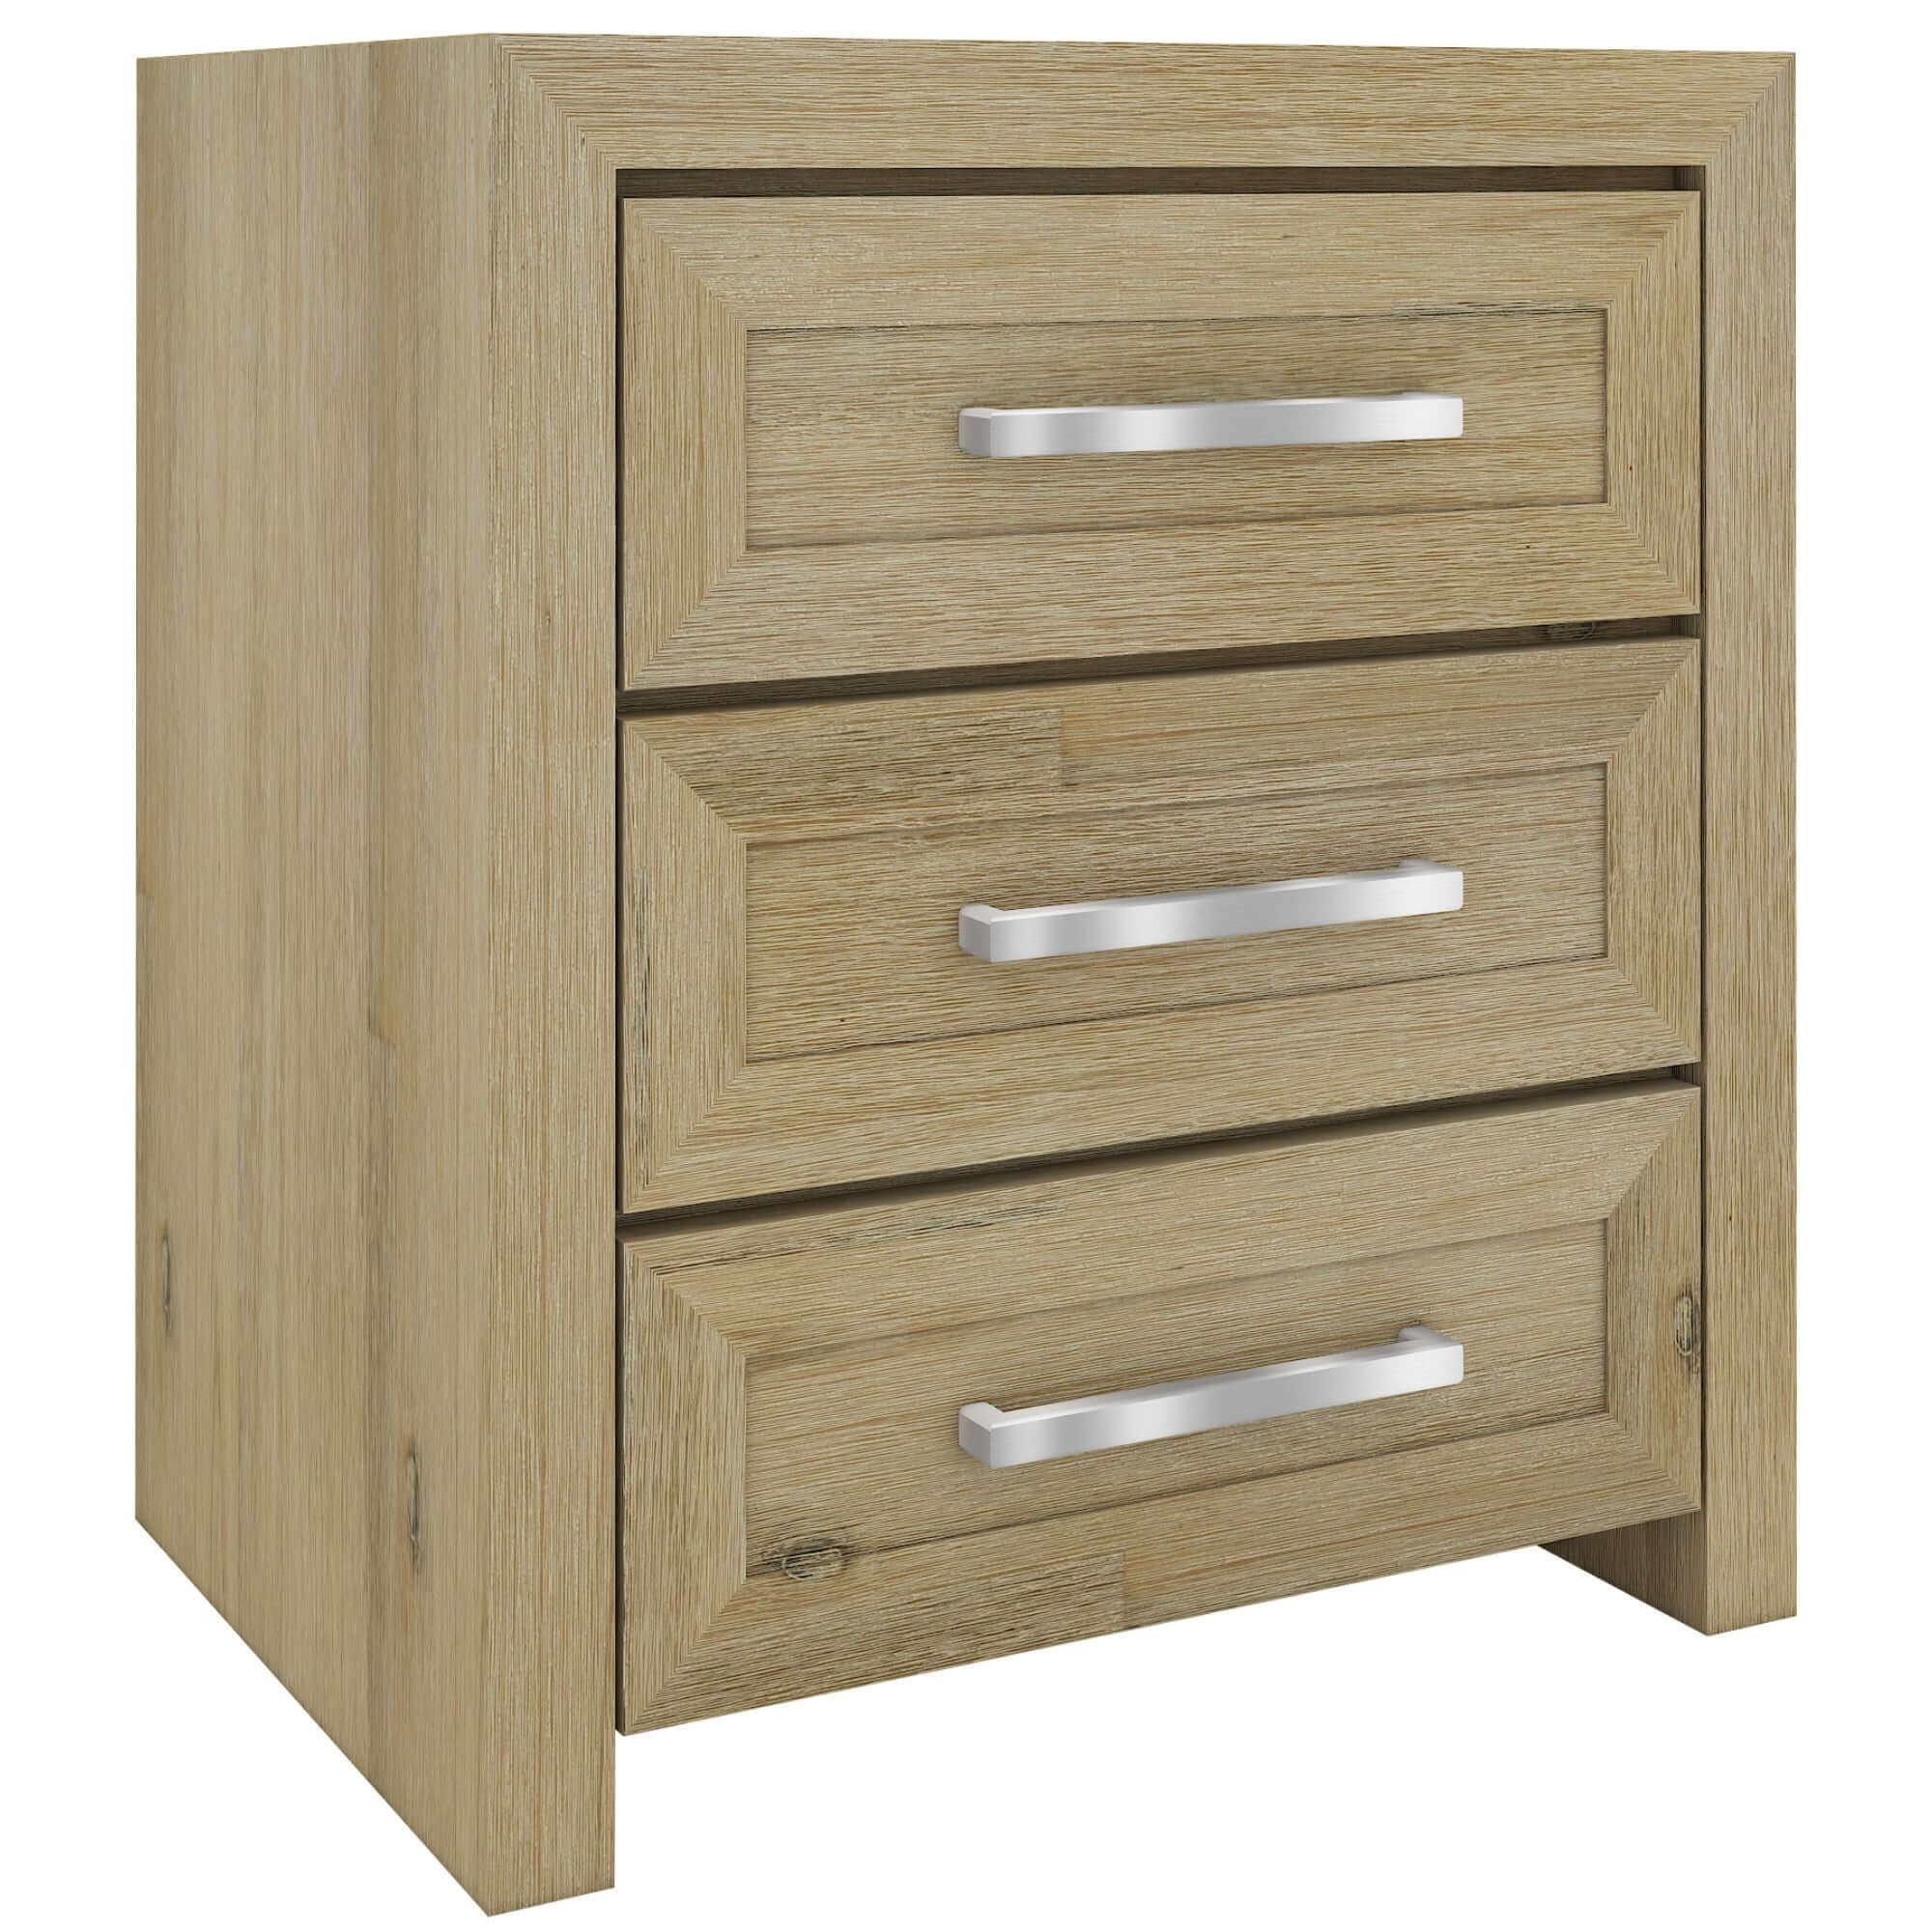 Gracelyn Set of 2 Bedside Nightstand 3 Drawers Bed Storage Cabinet - Smoke-Upinteriors